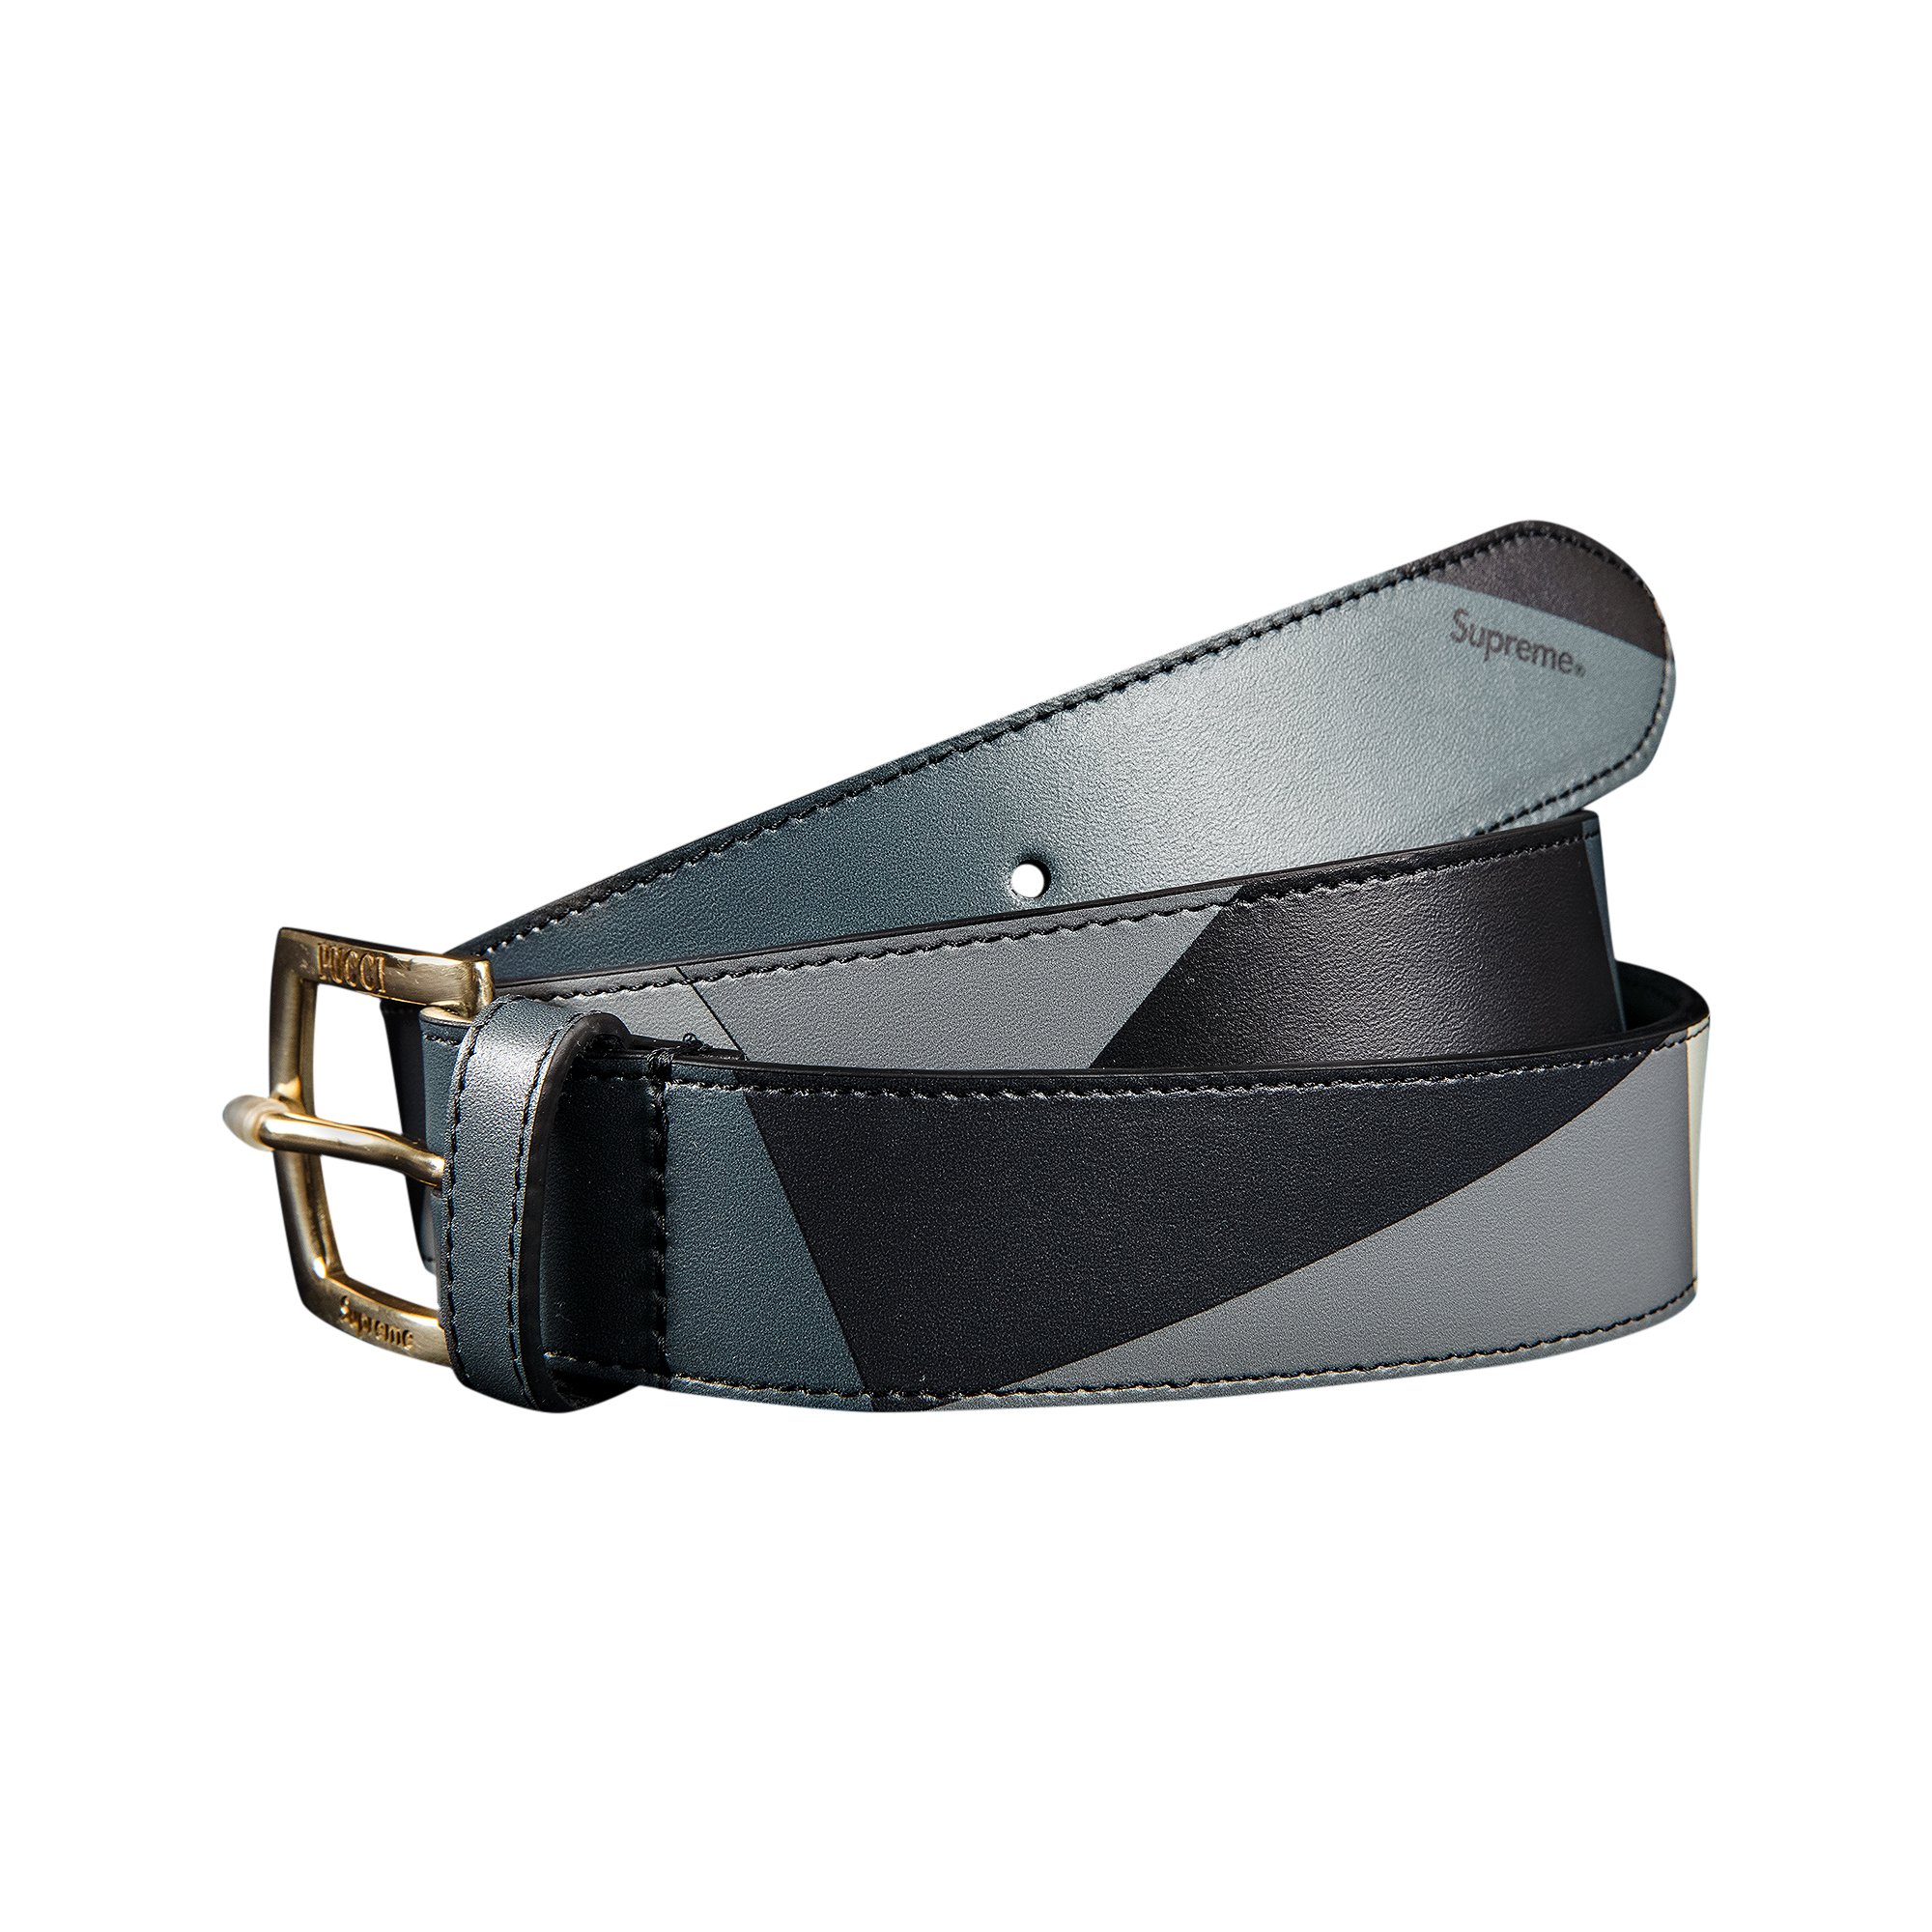 Supreme Emilio Pucci belt